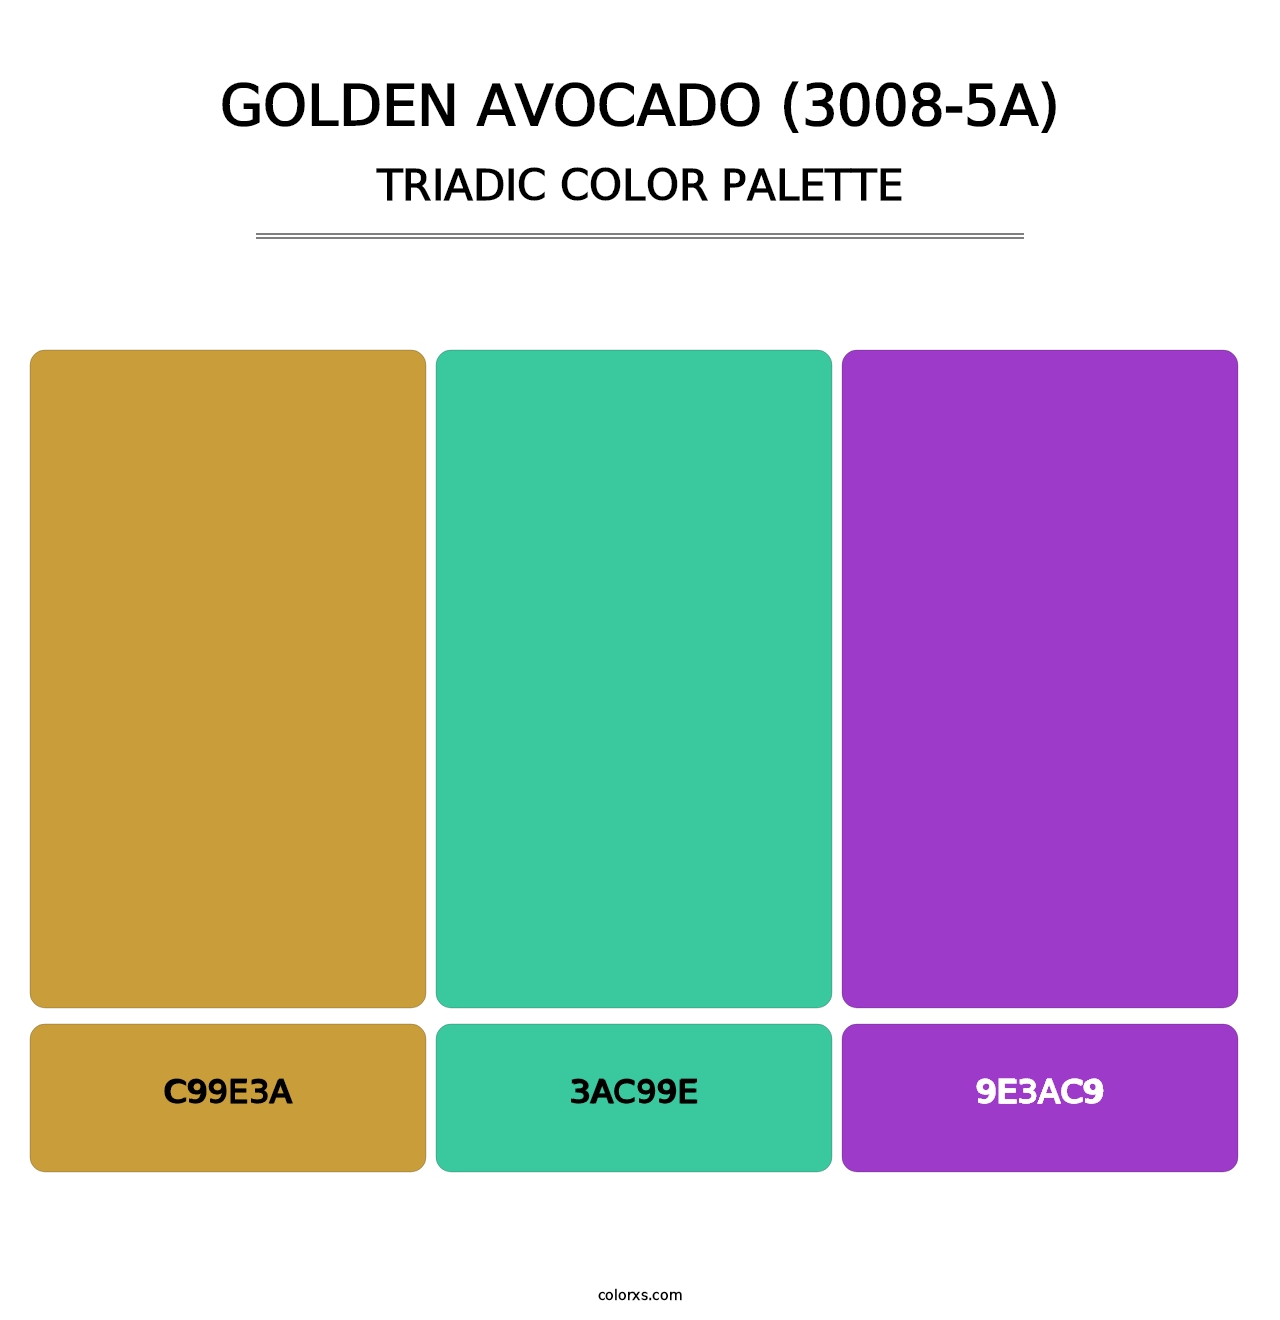 Golden Avocado (3008-5A) - Triadic Color Palette